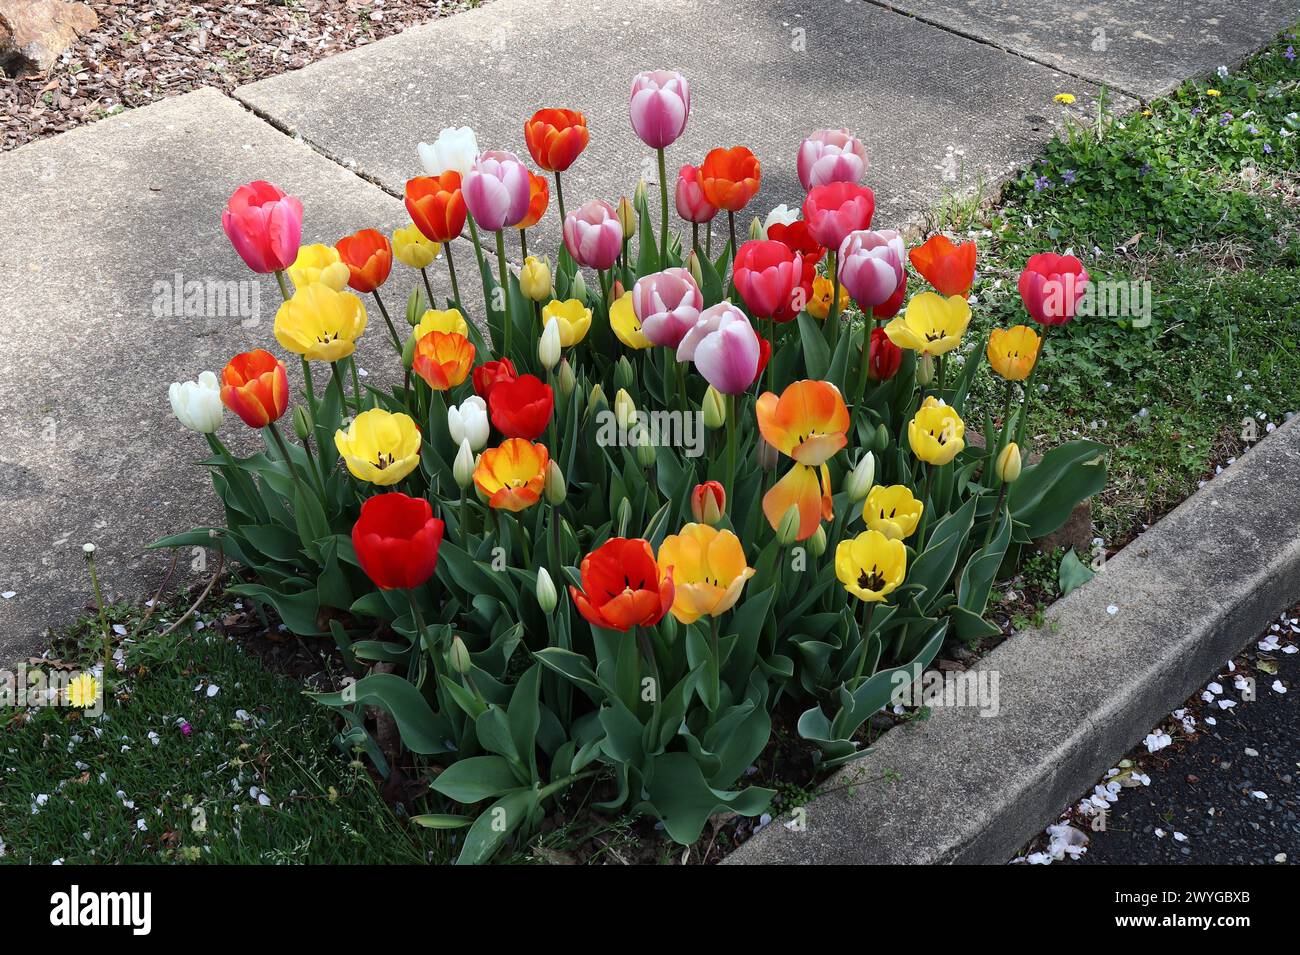 Viivid Colors of Tulip Plants Stock Photo